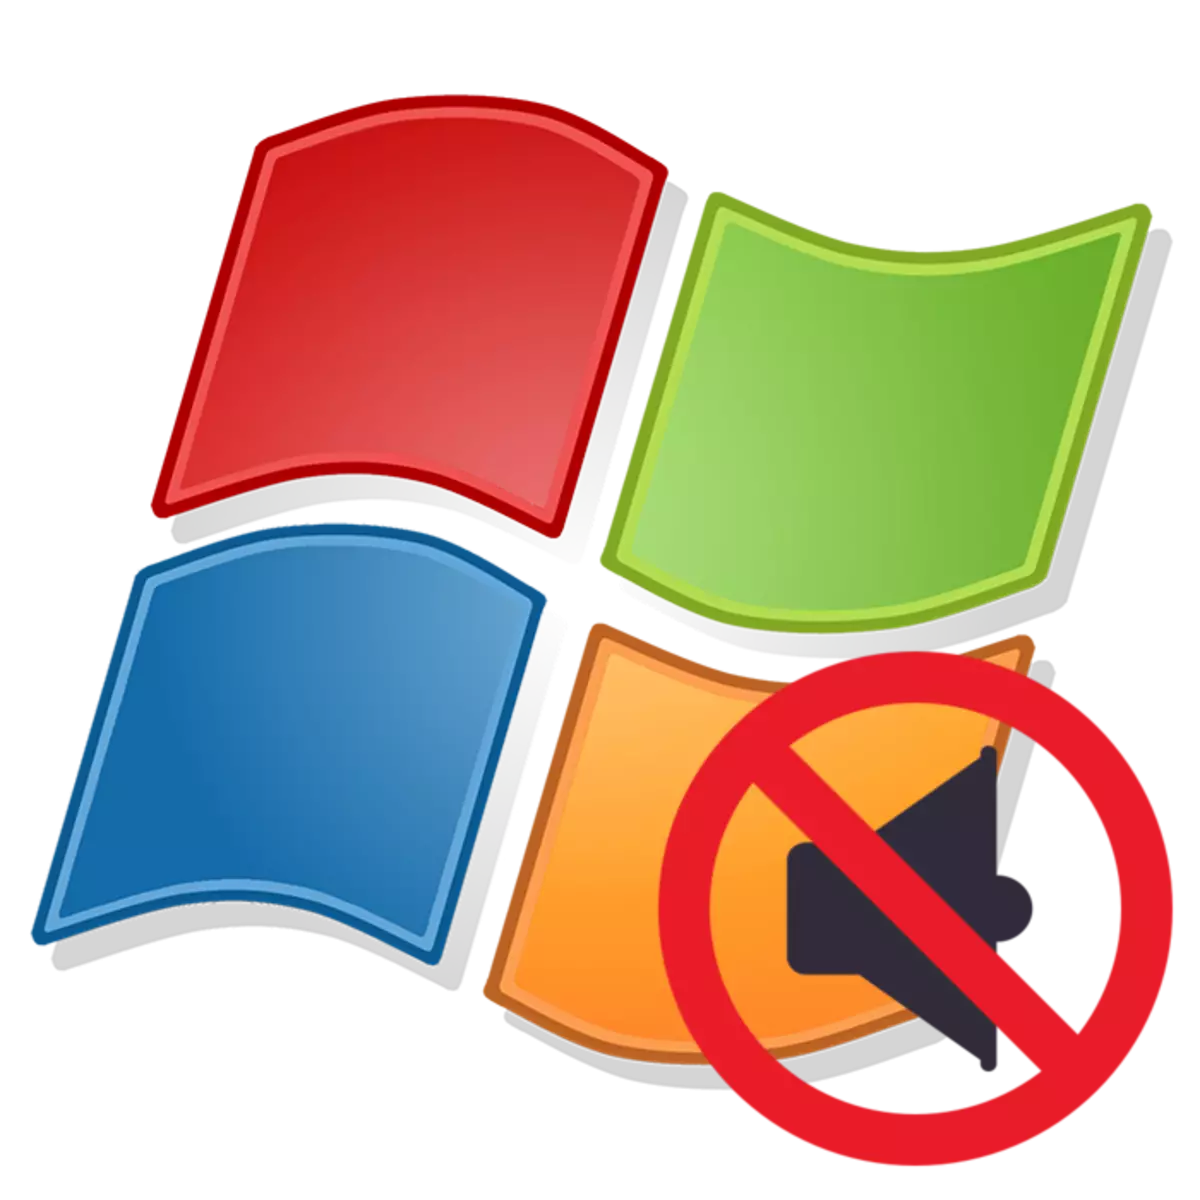 Audio җайланмалары Windows XPда юк ителәләр: Нәрсә эшләргә